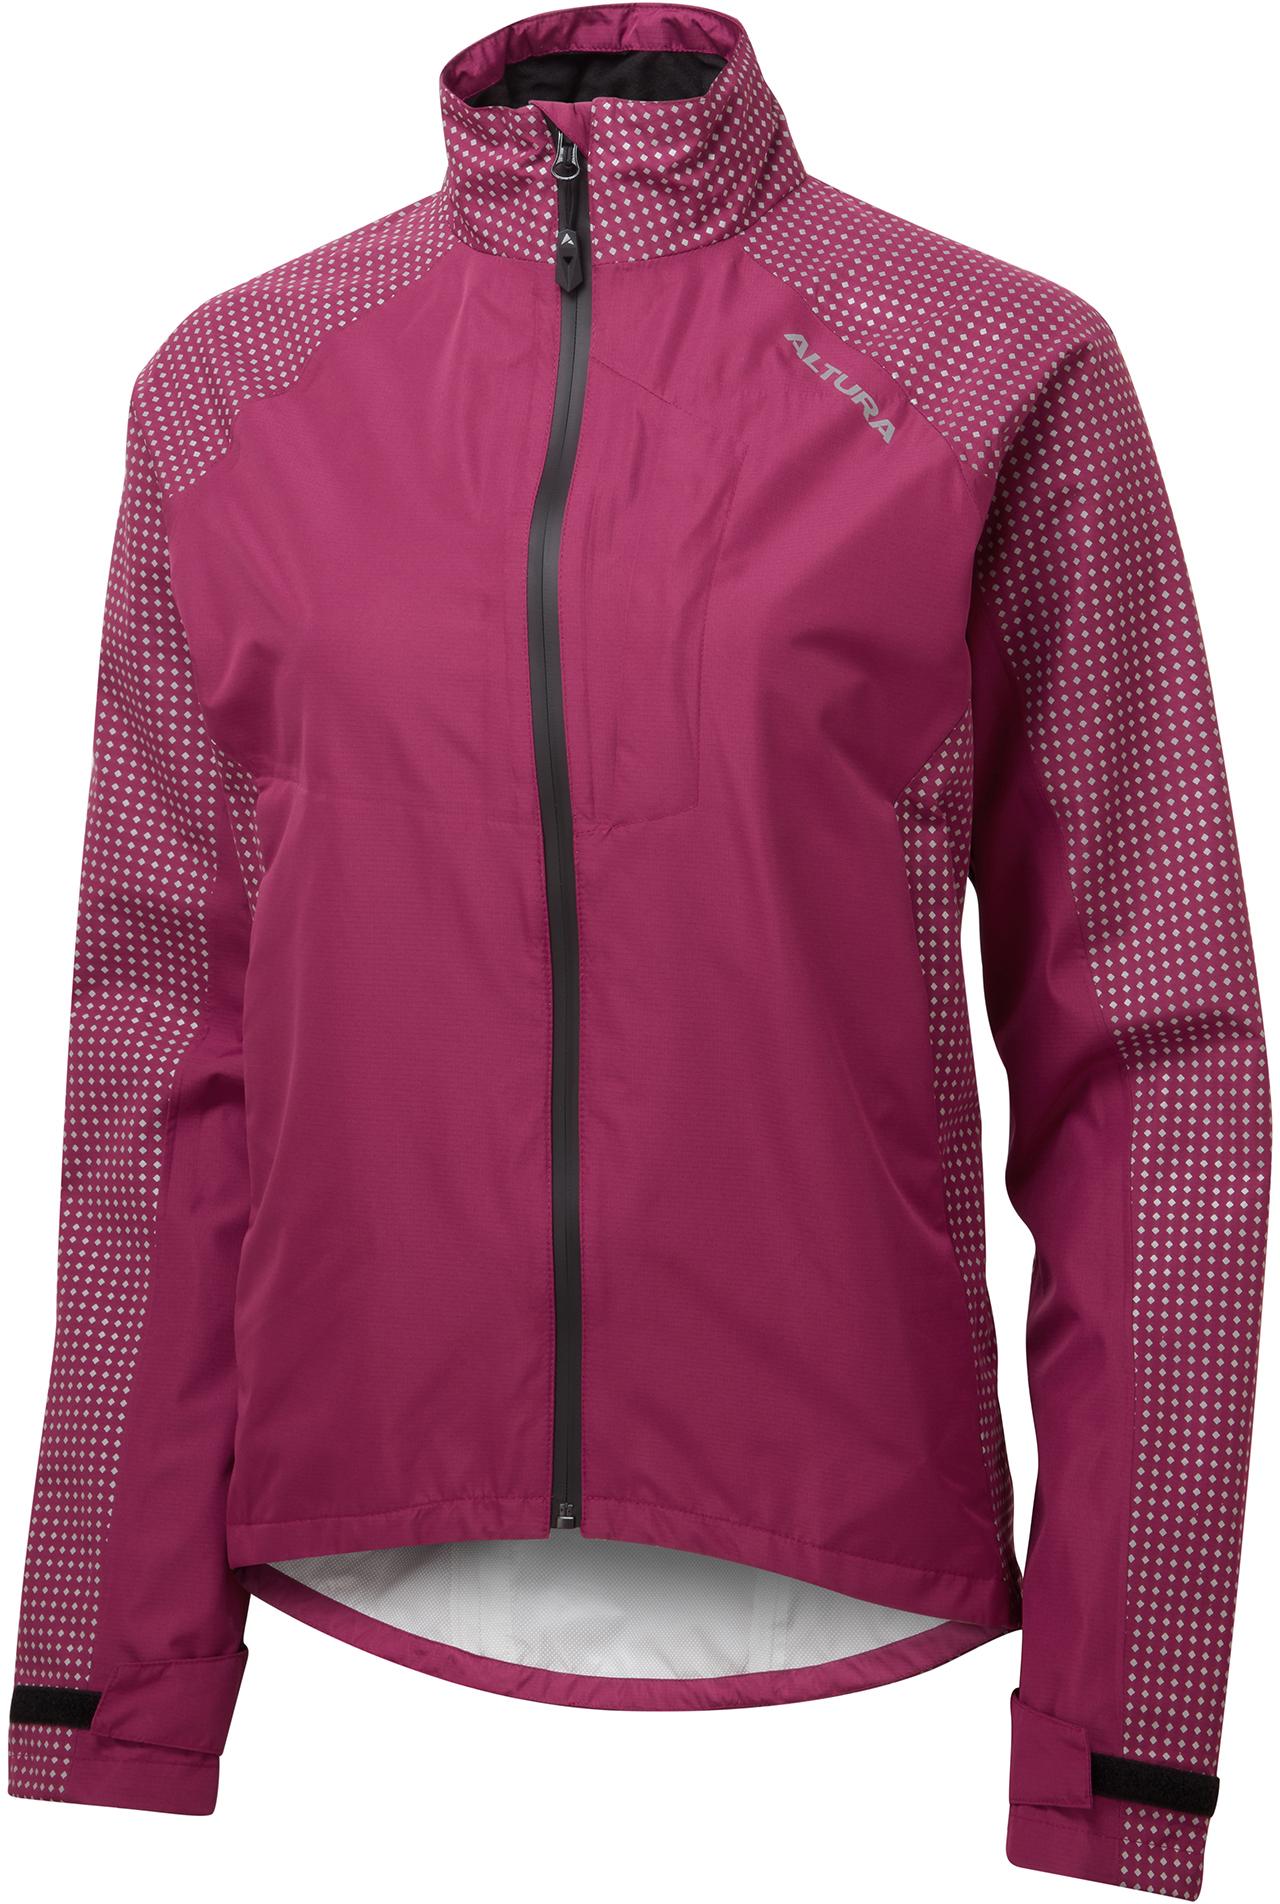 Altura Nightvision Storm Women's Waterproof Jacket Pink 14